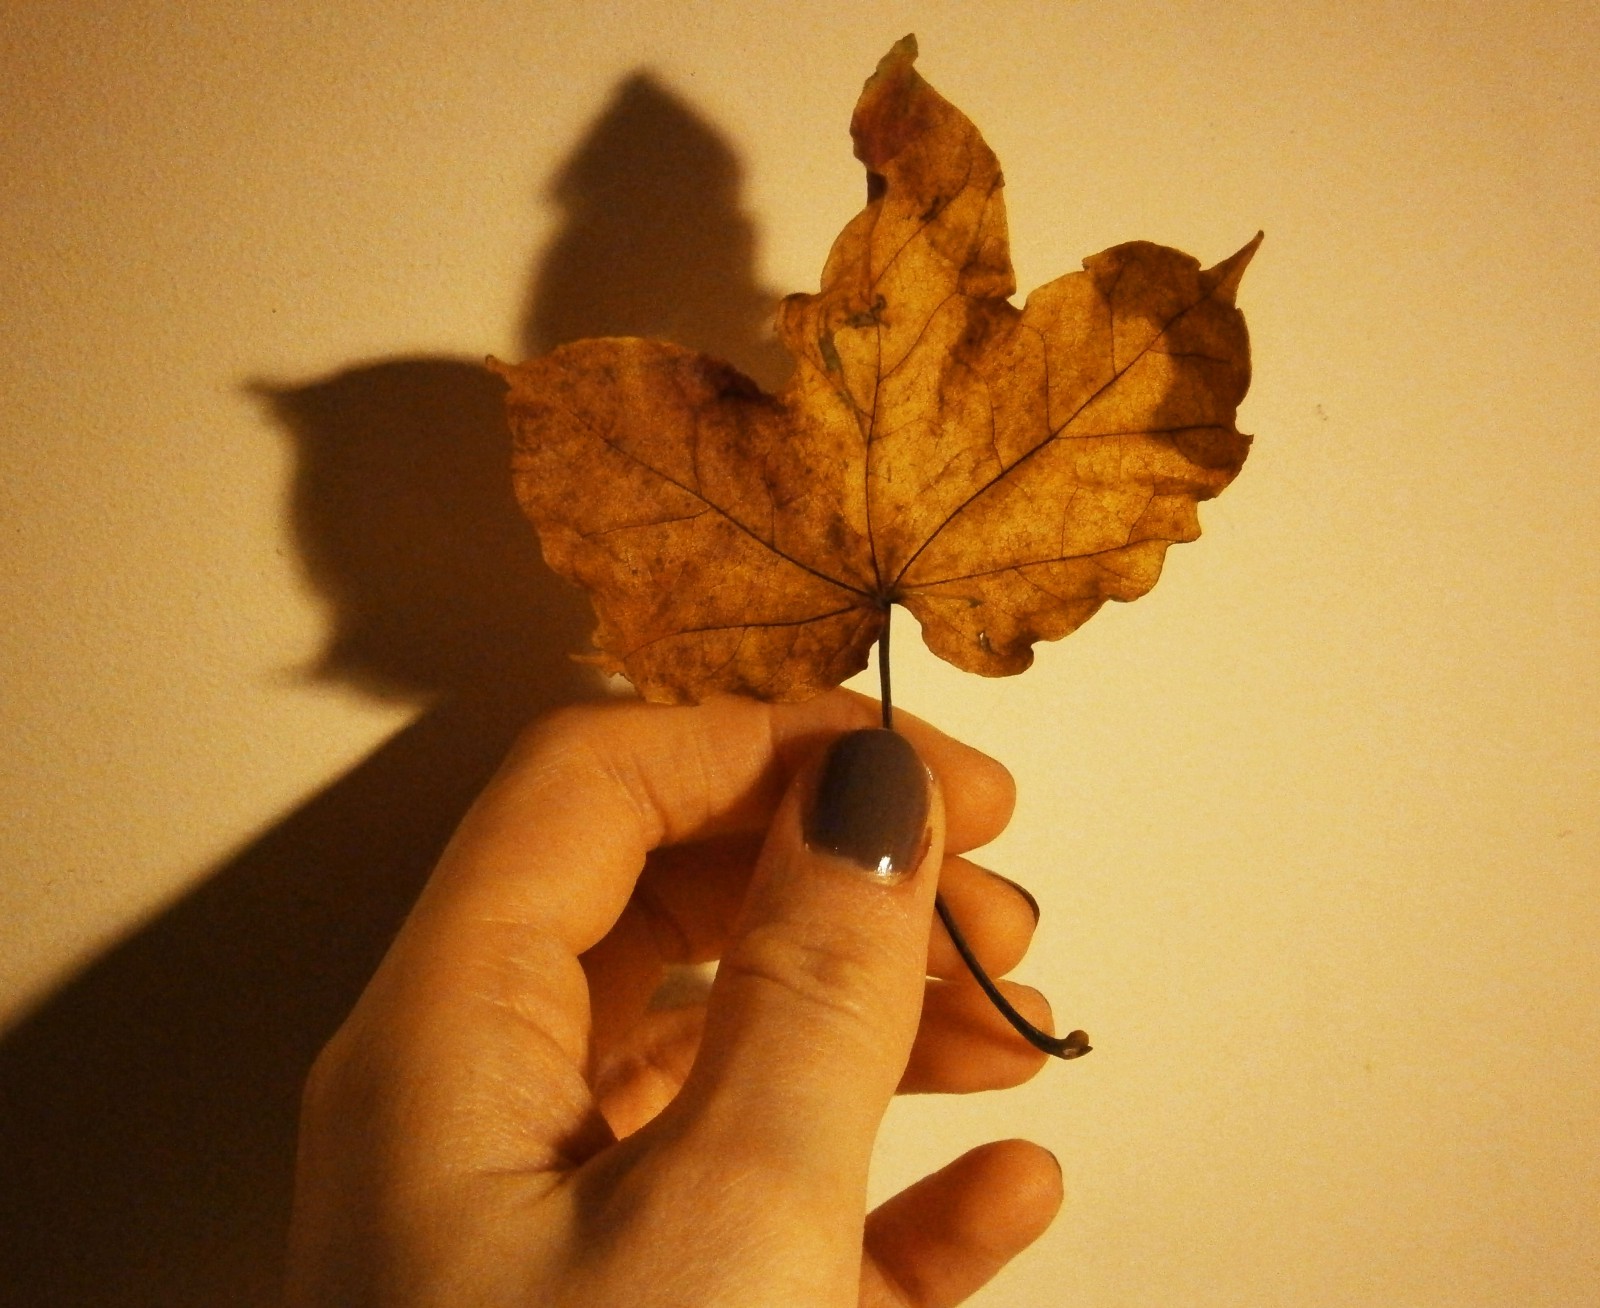 20: The Fallen Leaf – Objects – Medium